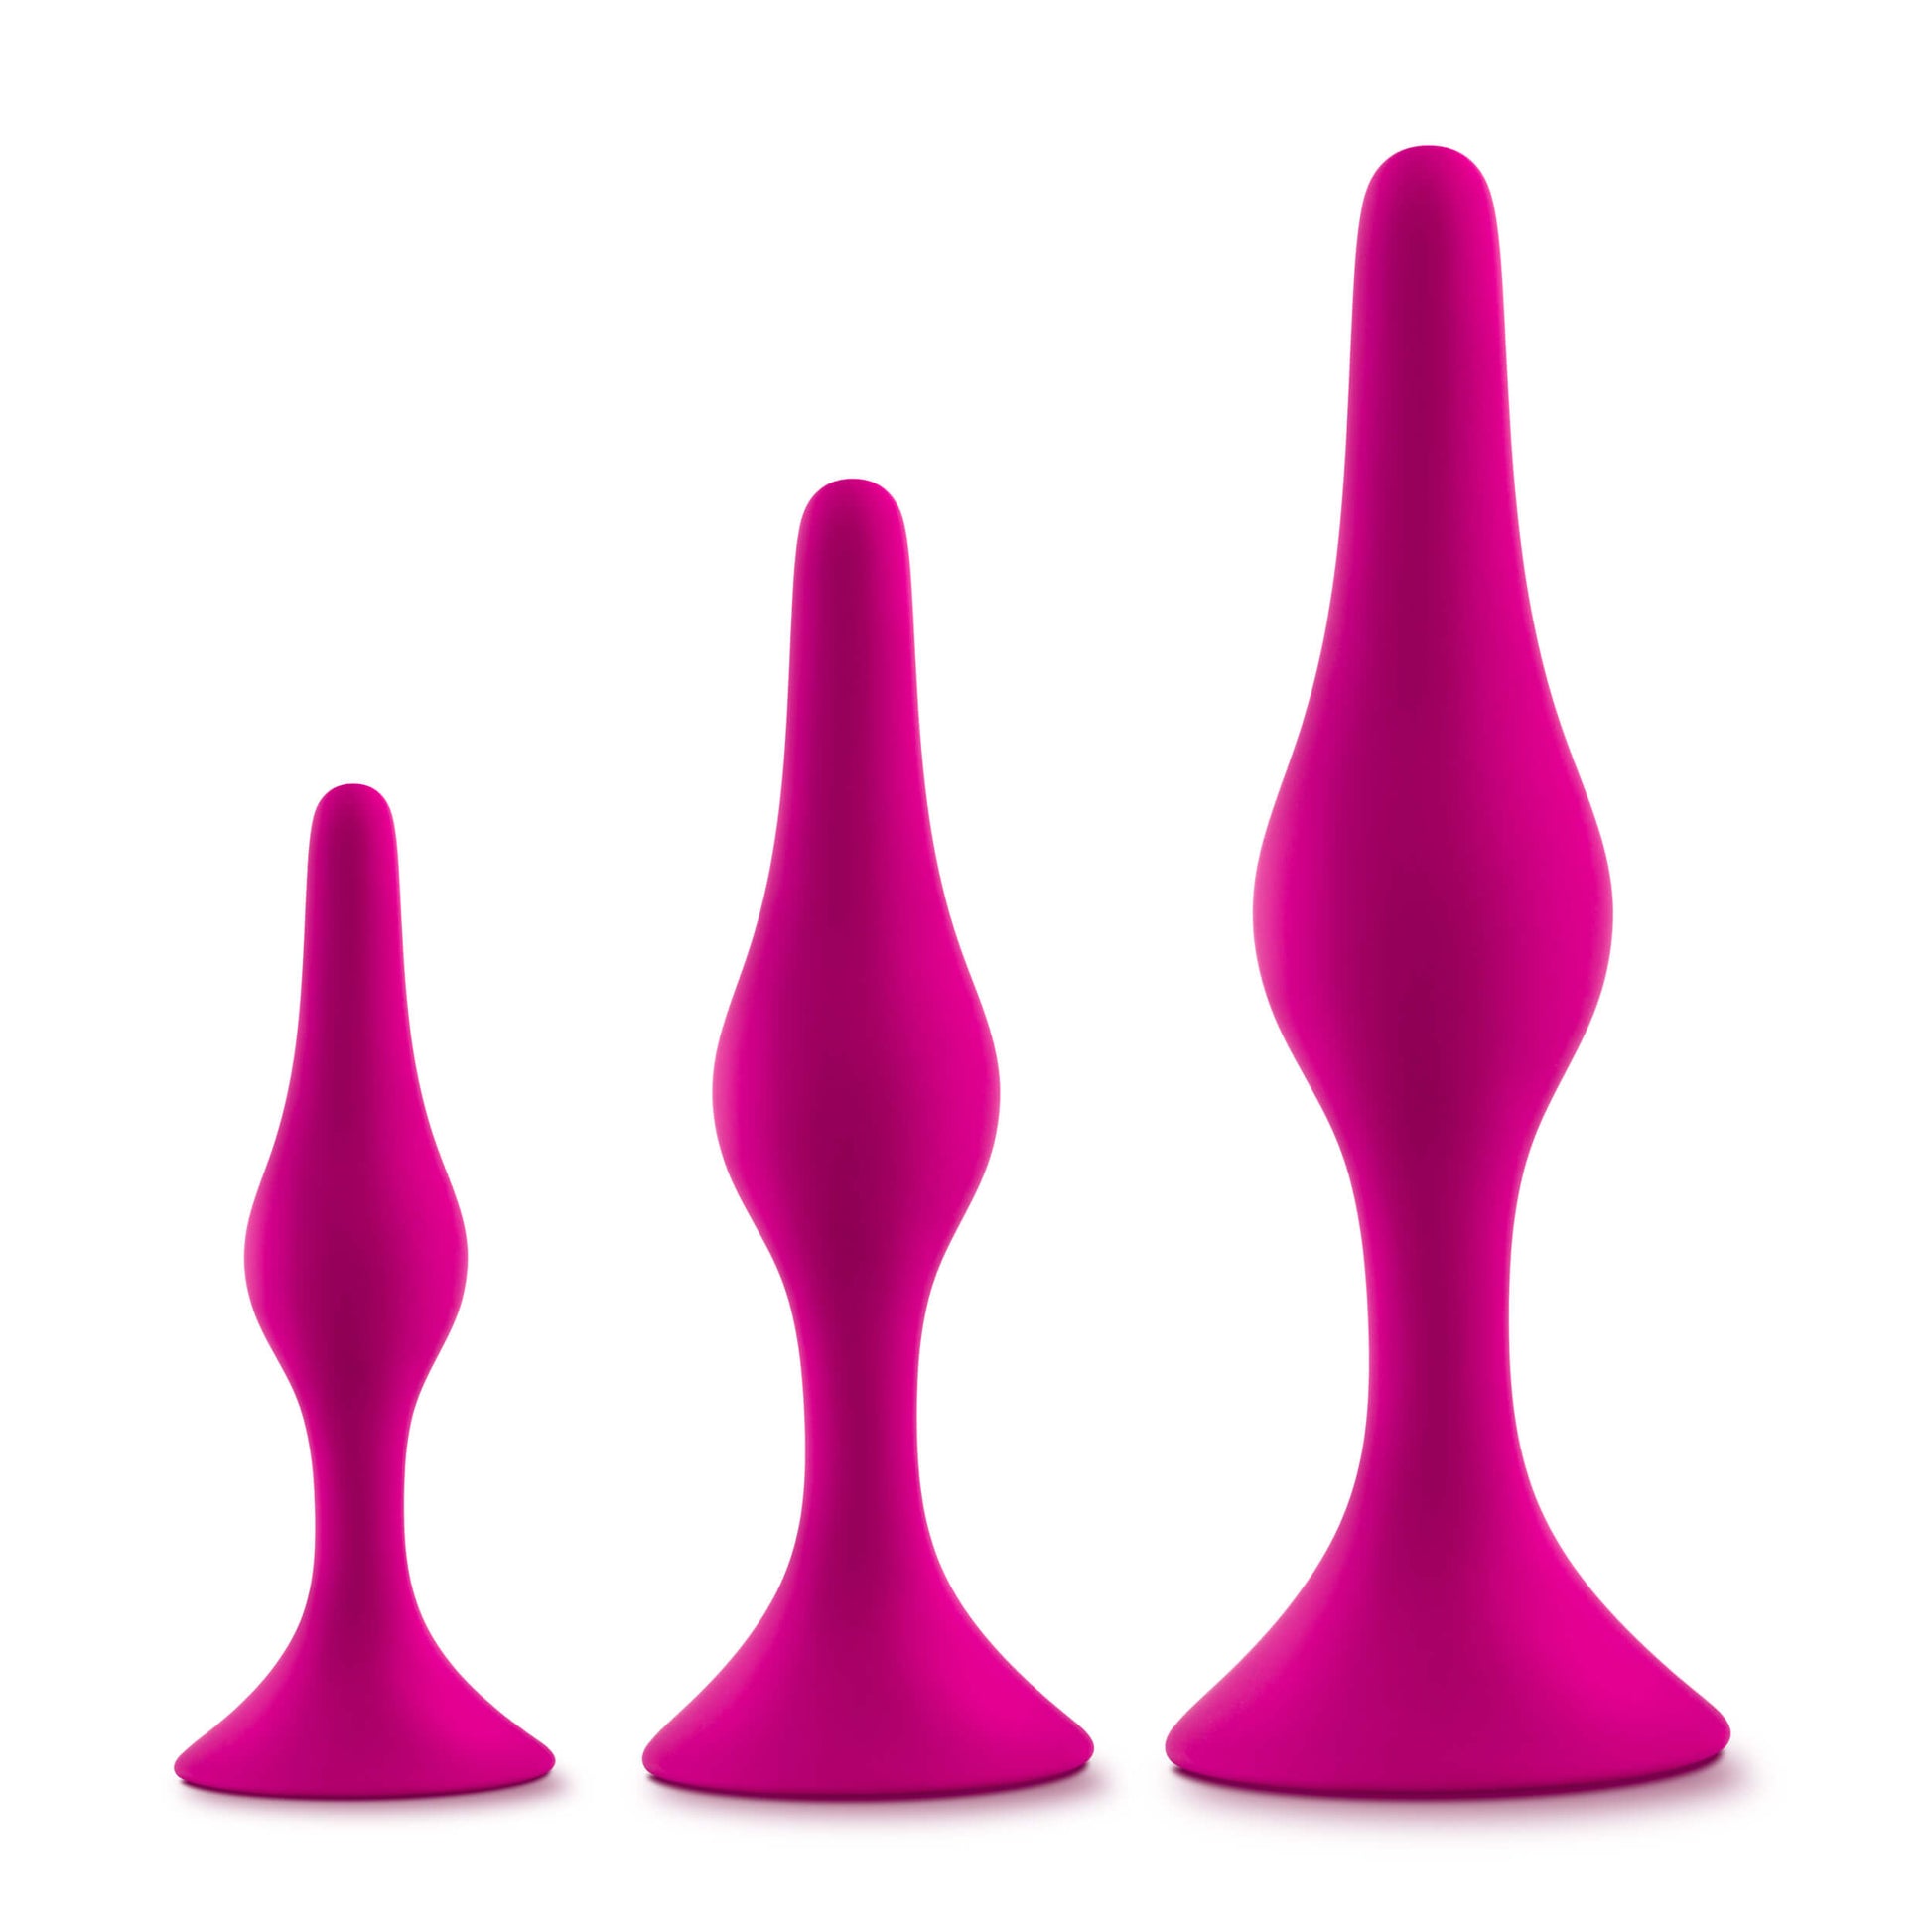 Luxe Beginner Plug Kit Blush Novelties - The Bigger O online sex toy shop